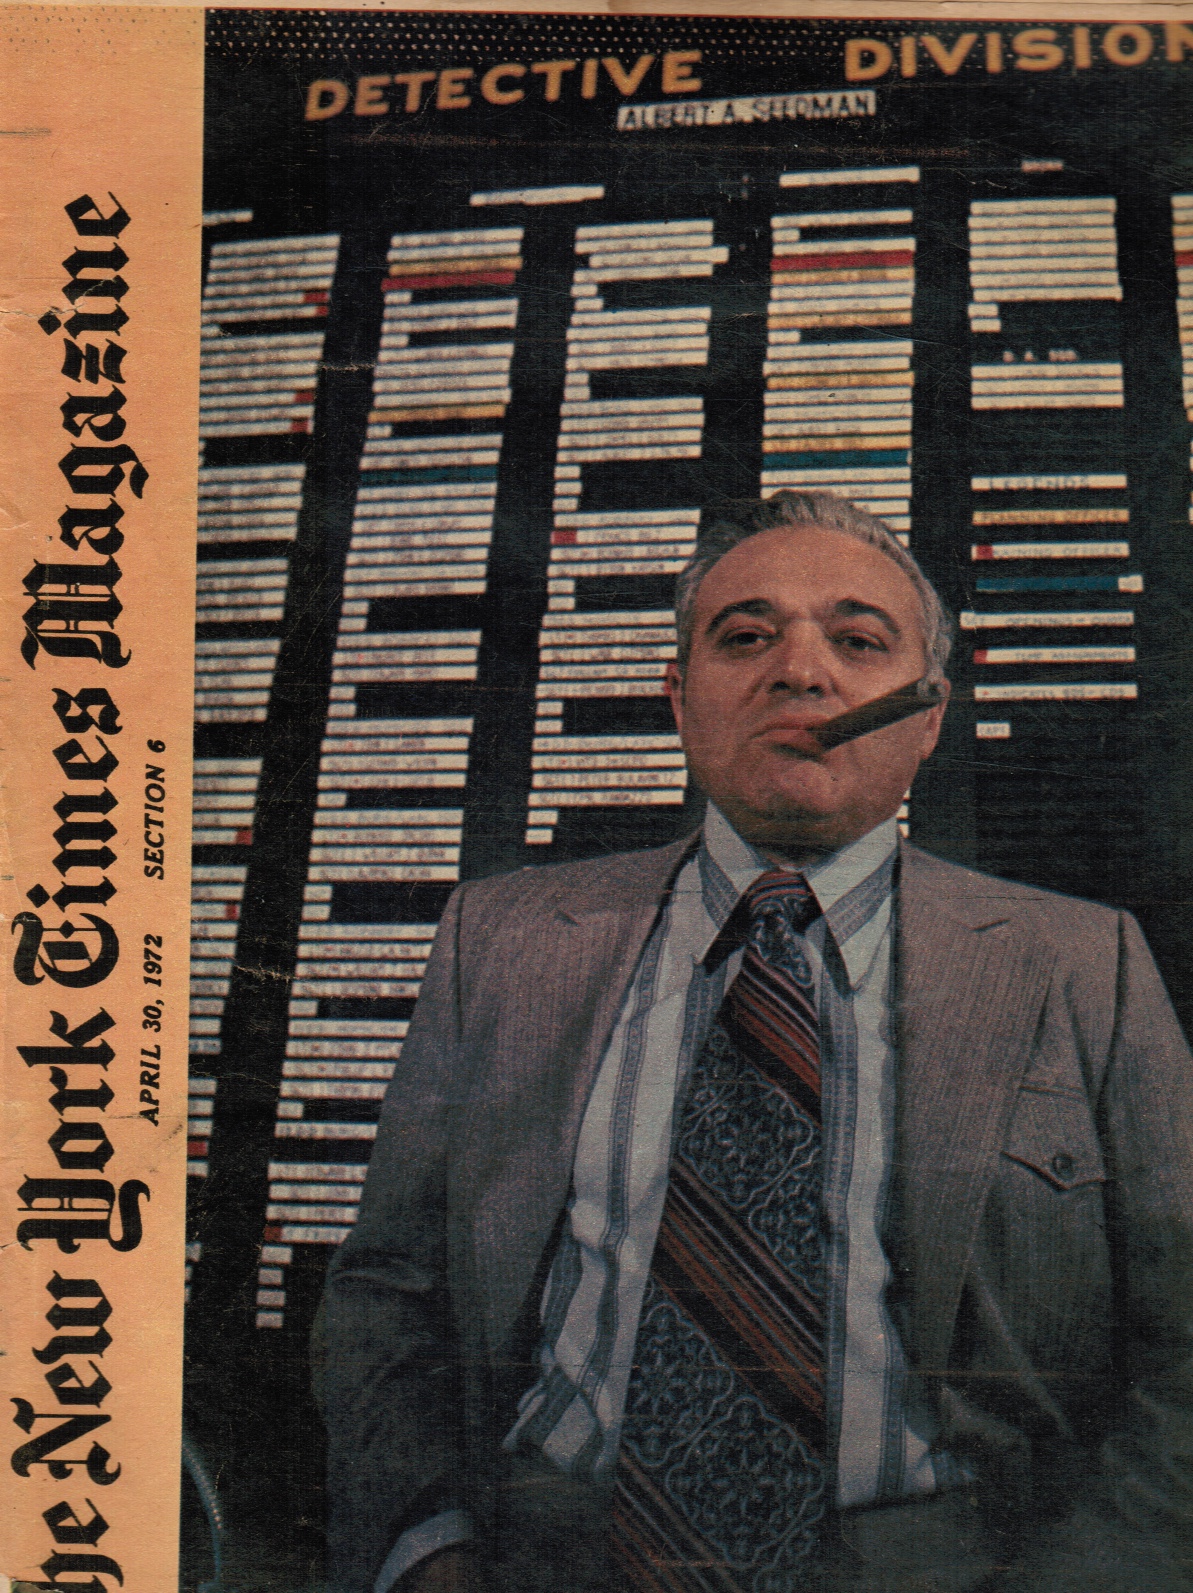 EDITORS, NEW YORK TIMES MAGAZINE - 1972 - the New York Times Magazine: April 30, 1972 (Section 6) Cover: Detective Story - Albert Seedman